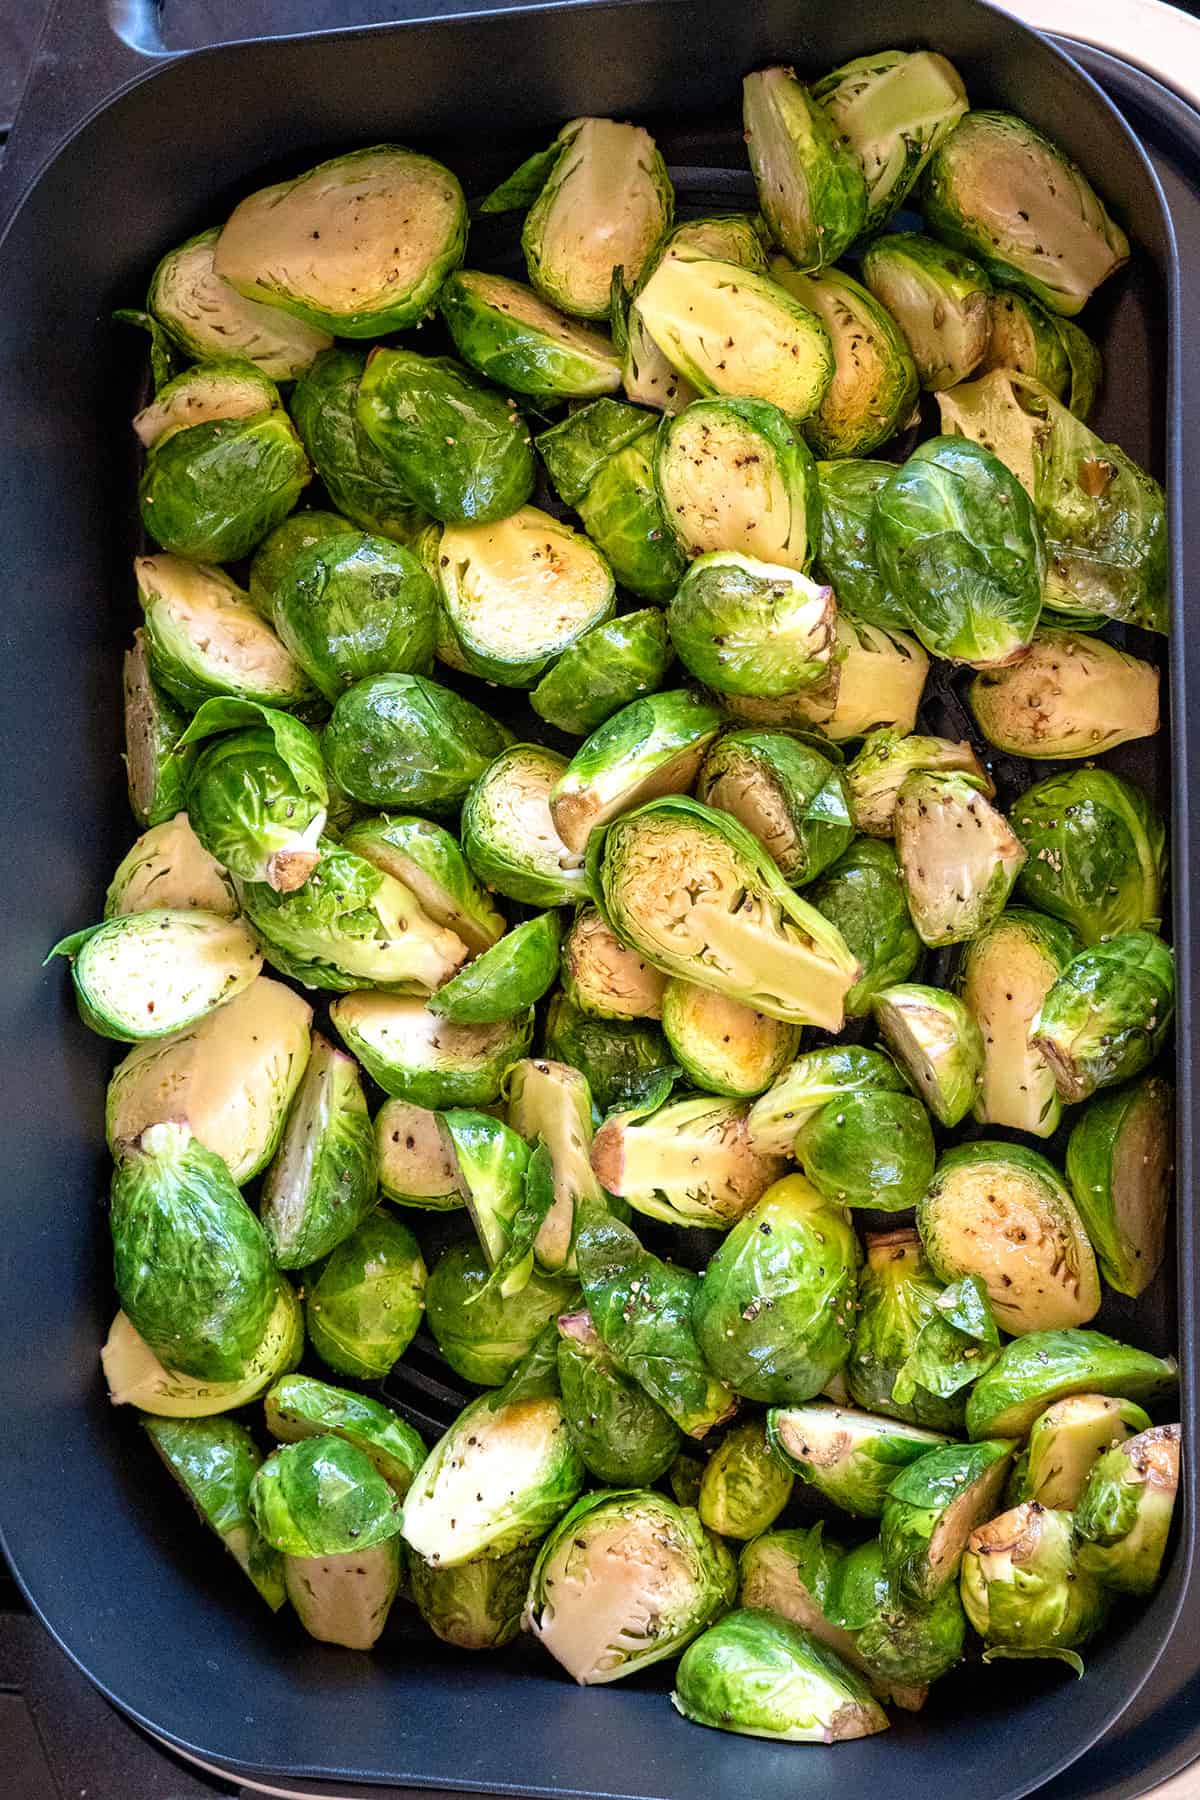 seasoned brussels sprouts in air crisper basket on grill.